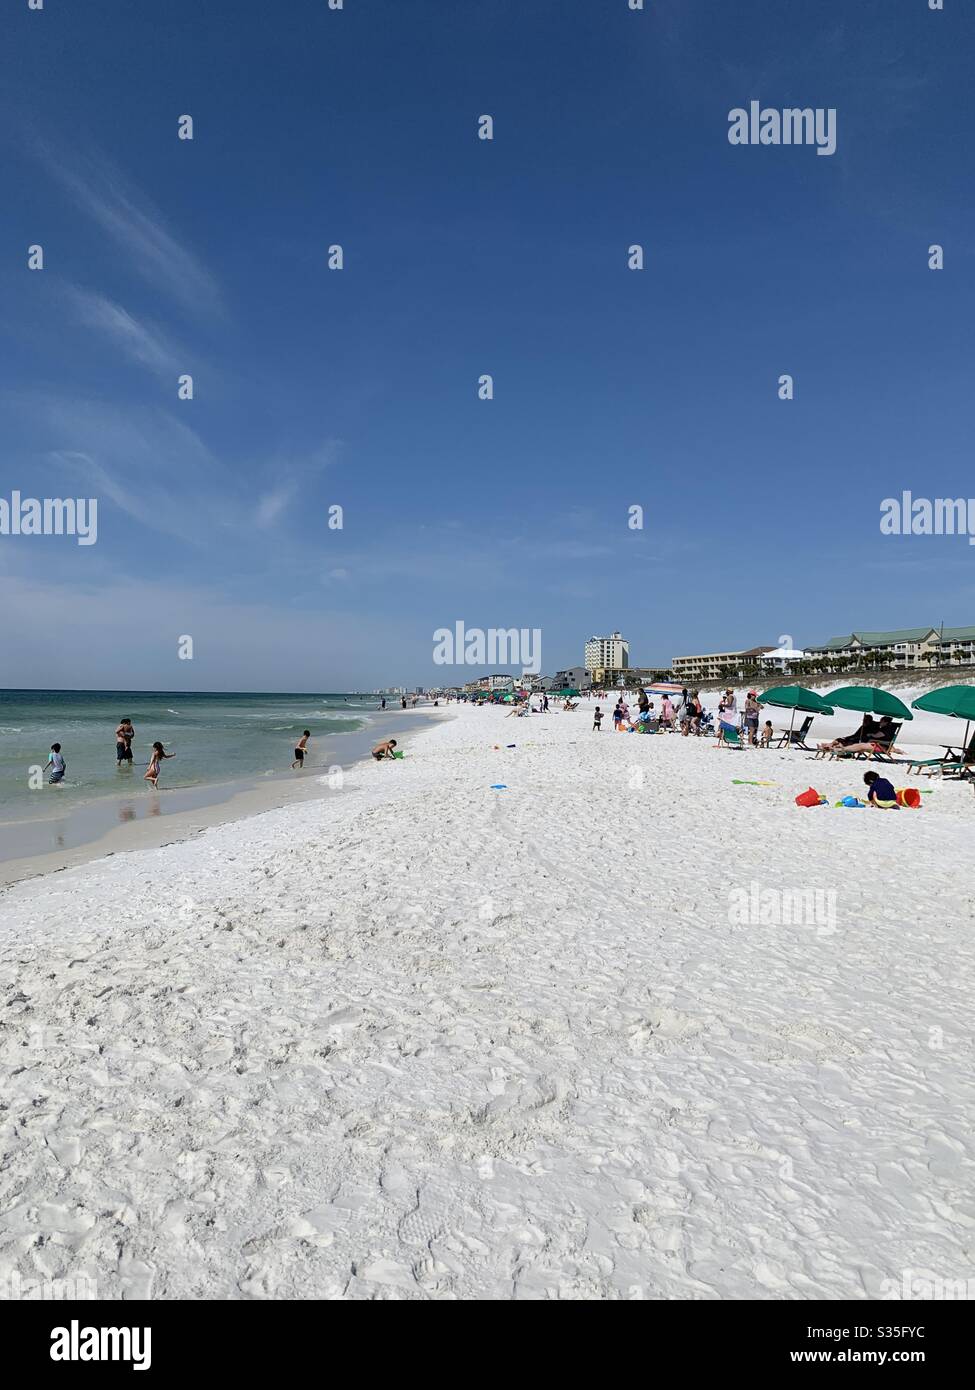 Summertime on the beach in Destin Florida Stock Photo - Alamy